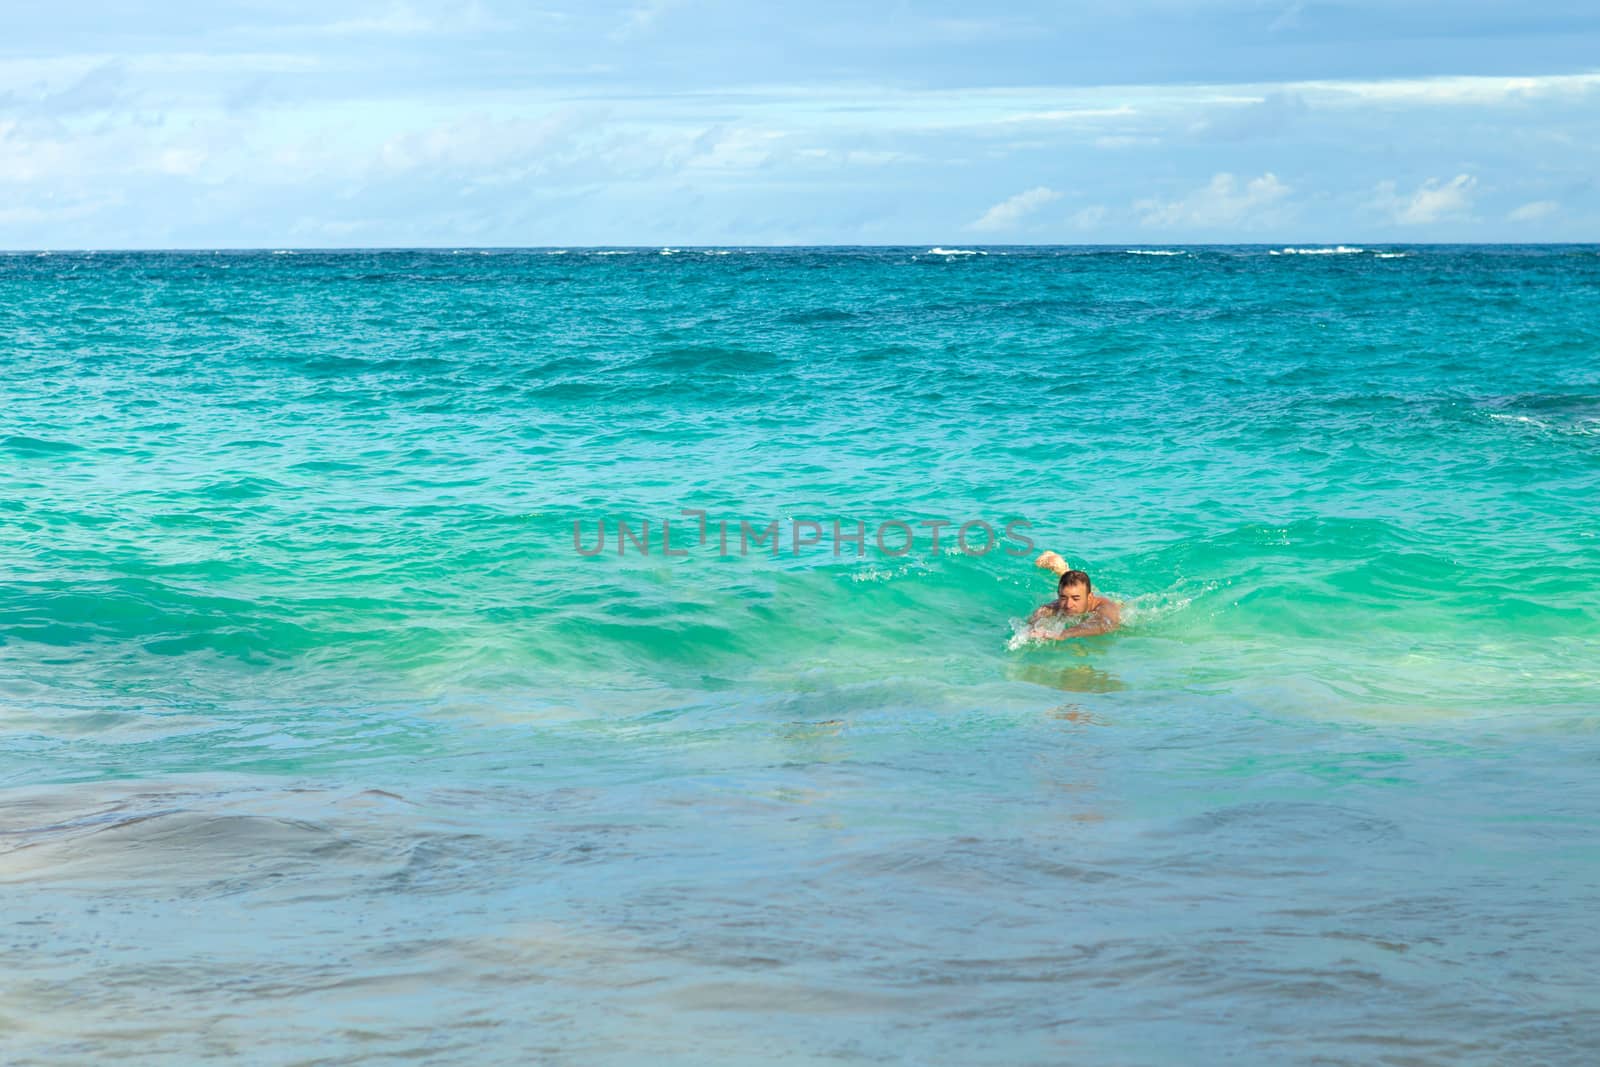 Bermuda Beach Swimmer by graficallyminded